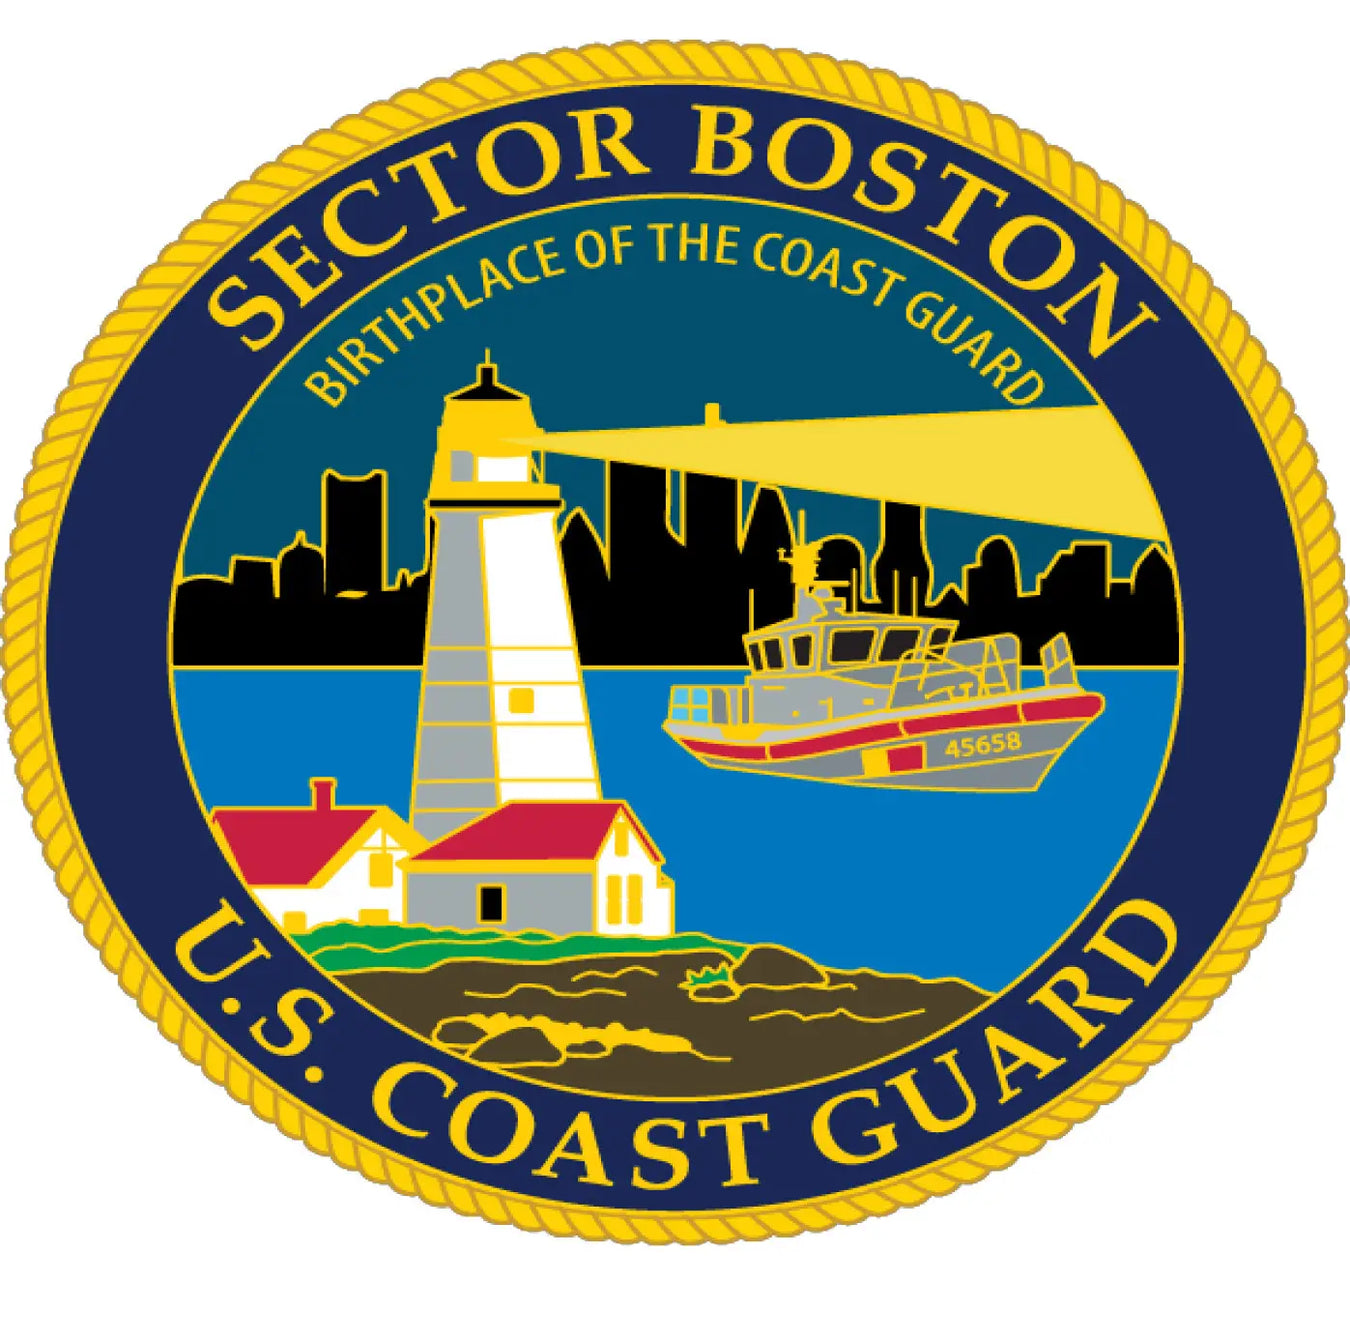 Sector Boston